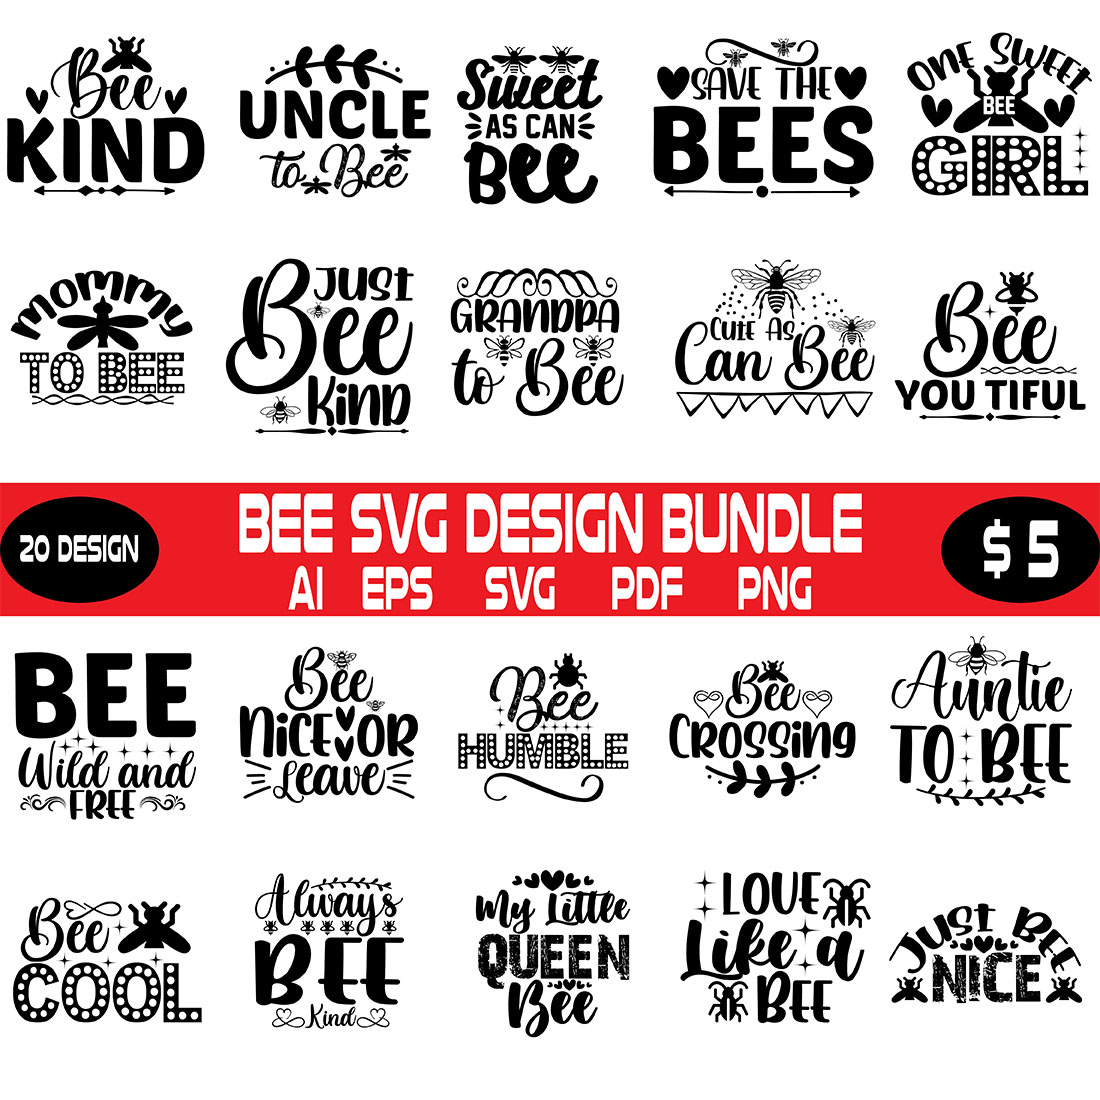 Bee Svg Design Bundle preview image.